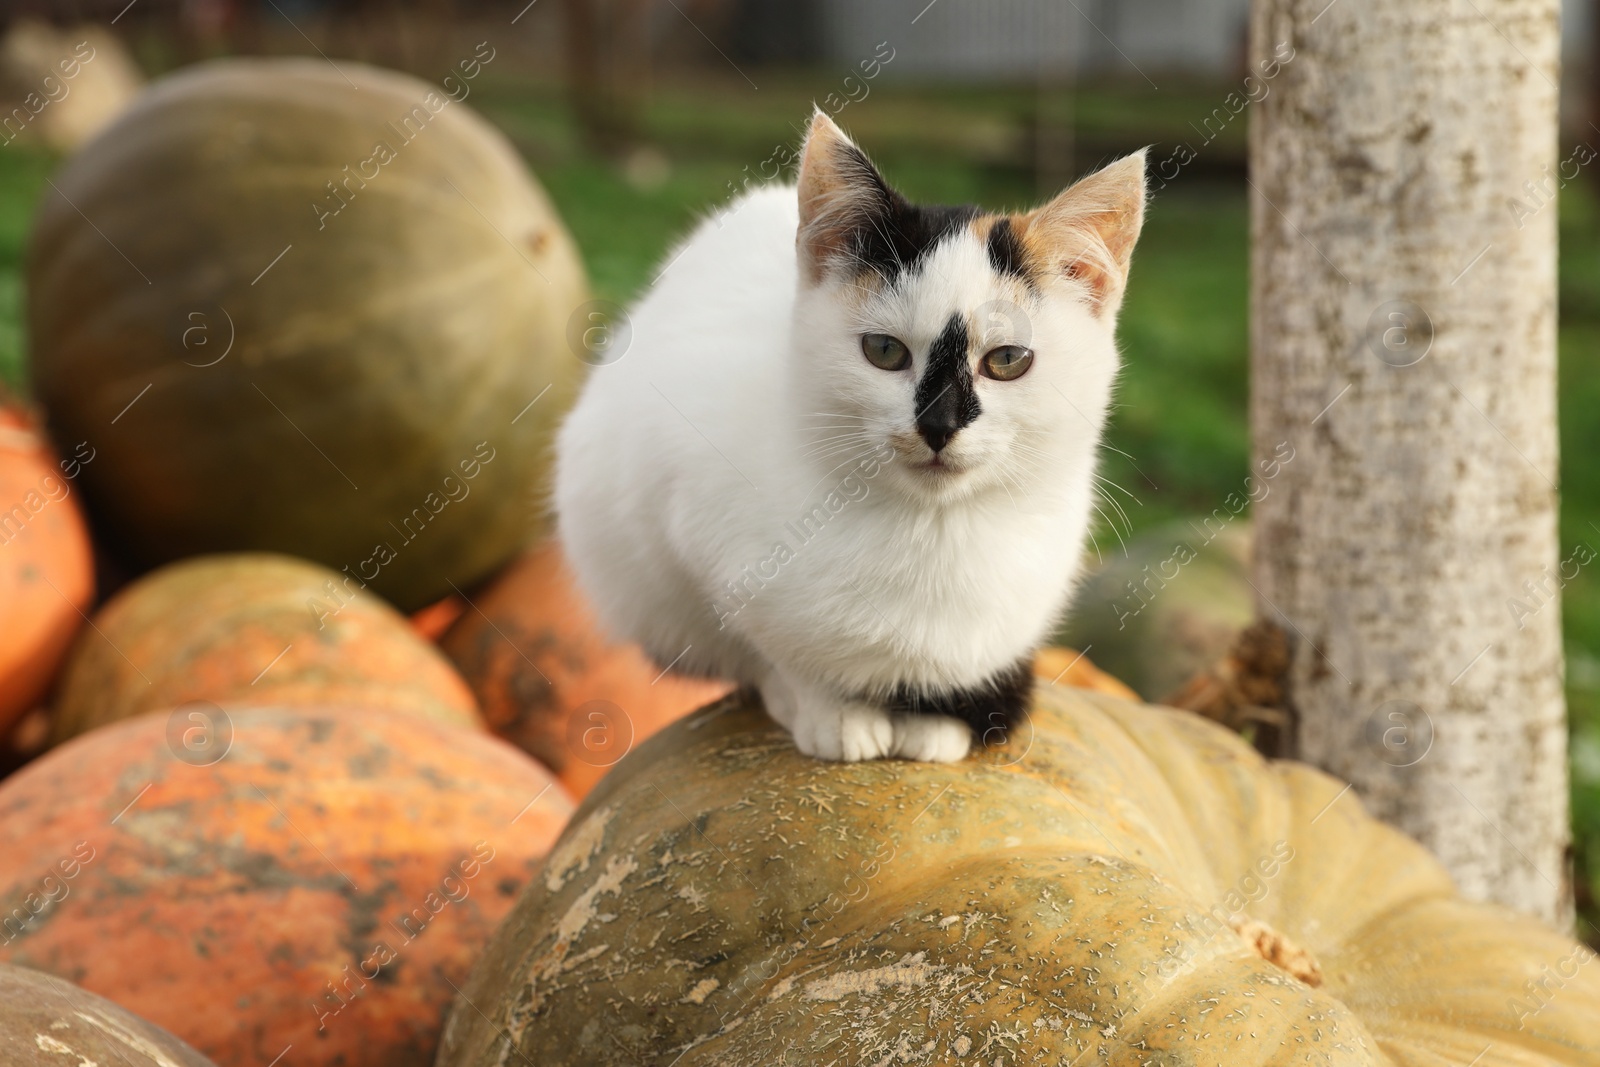 Photo of Cute fluffy cat on ripe pumpkin outdoors